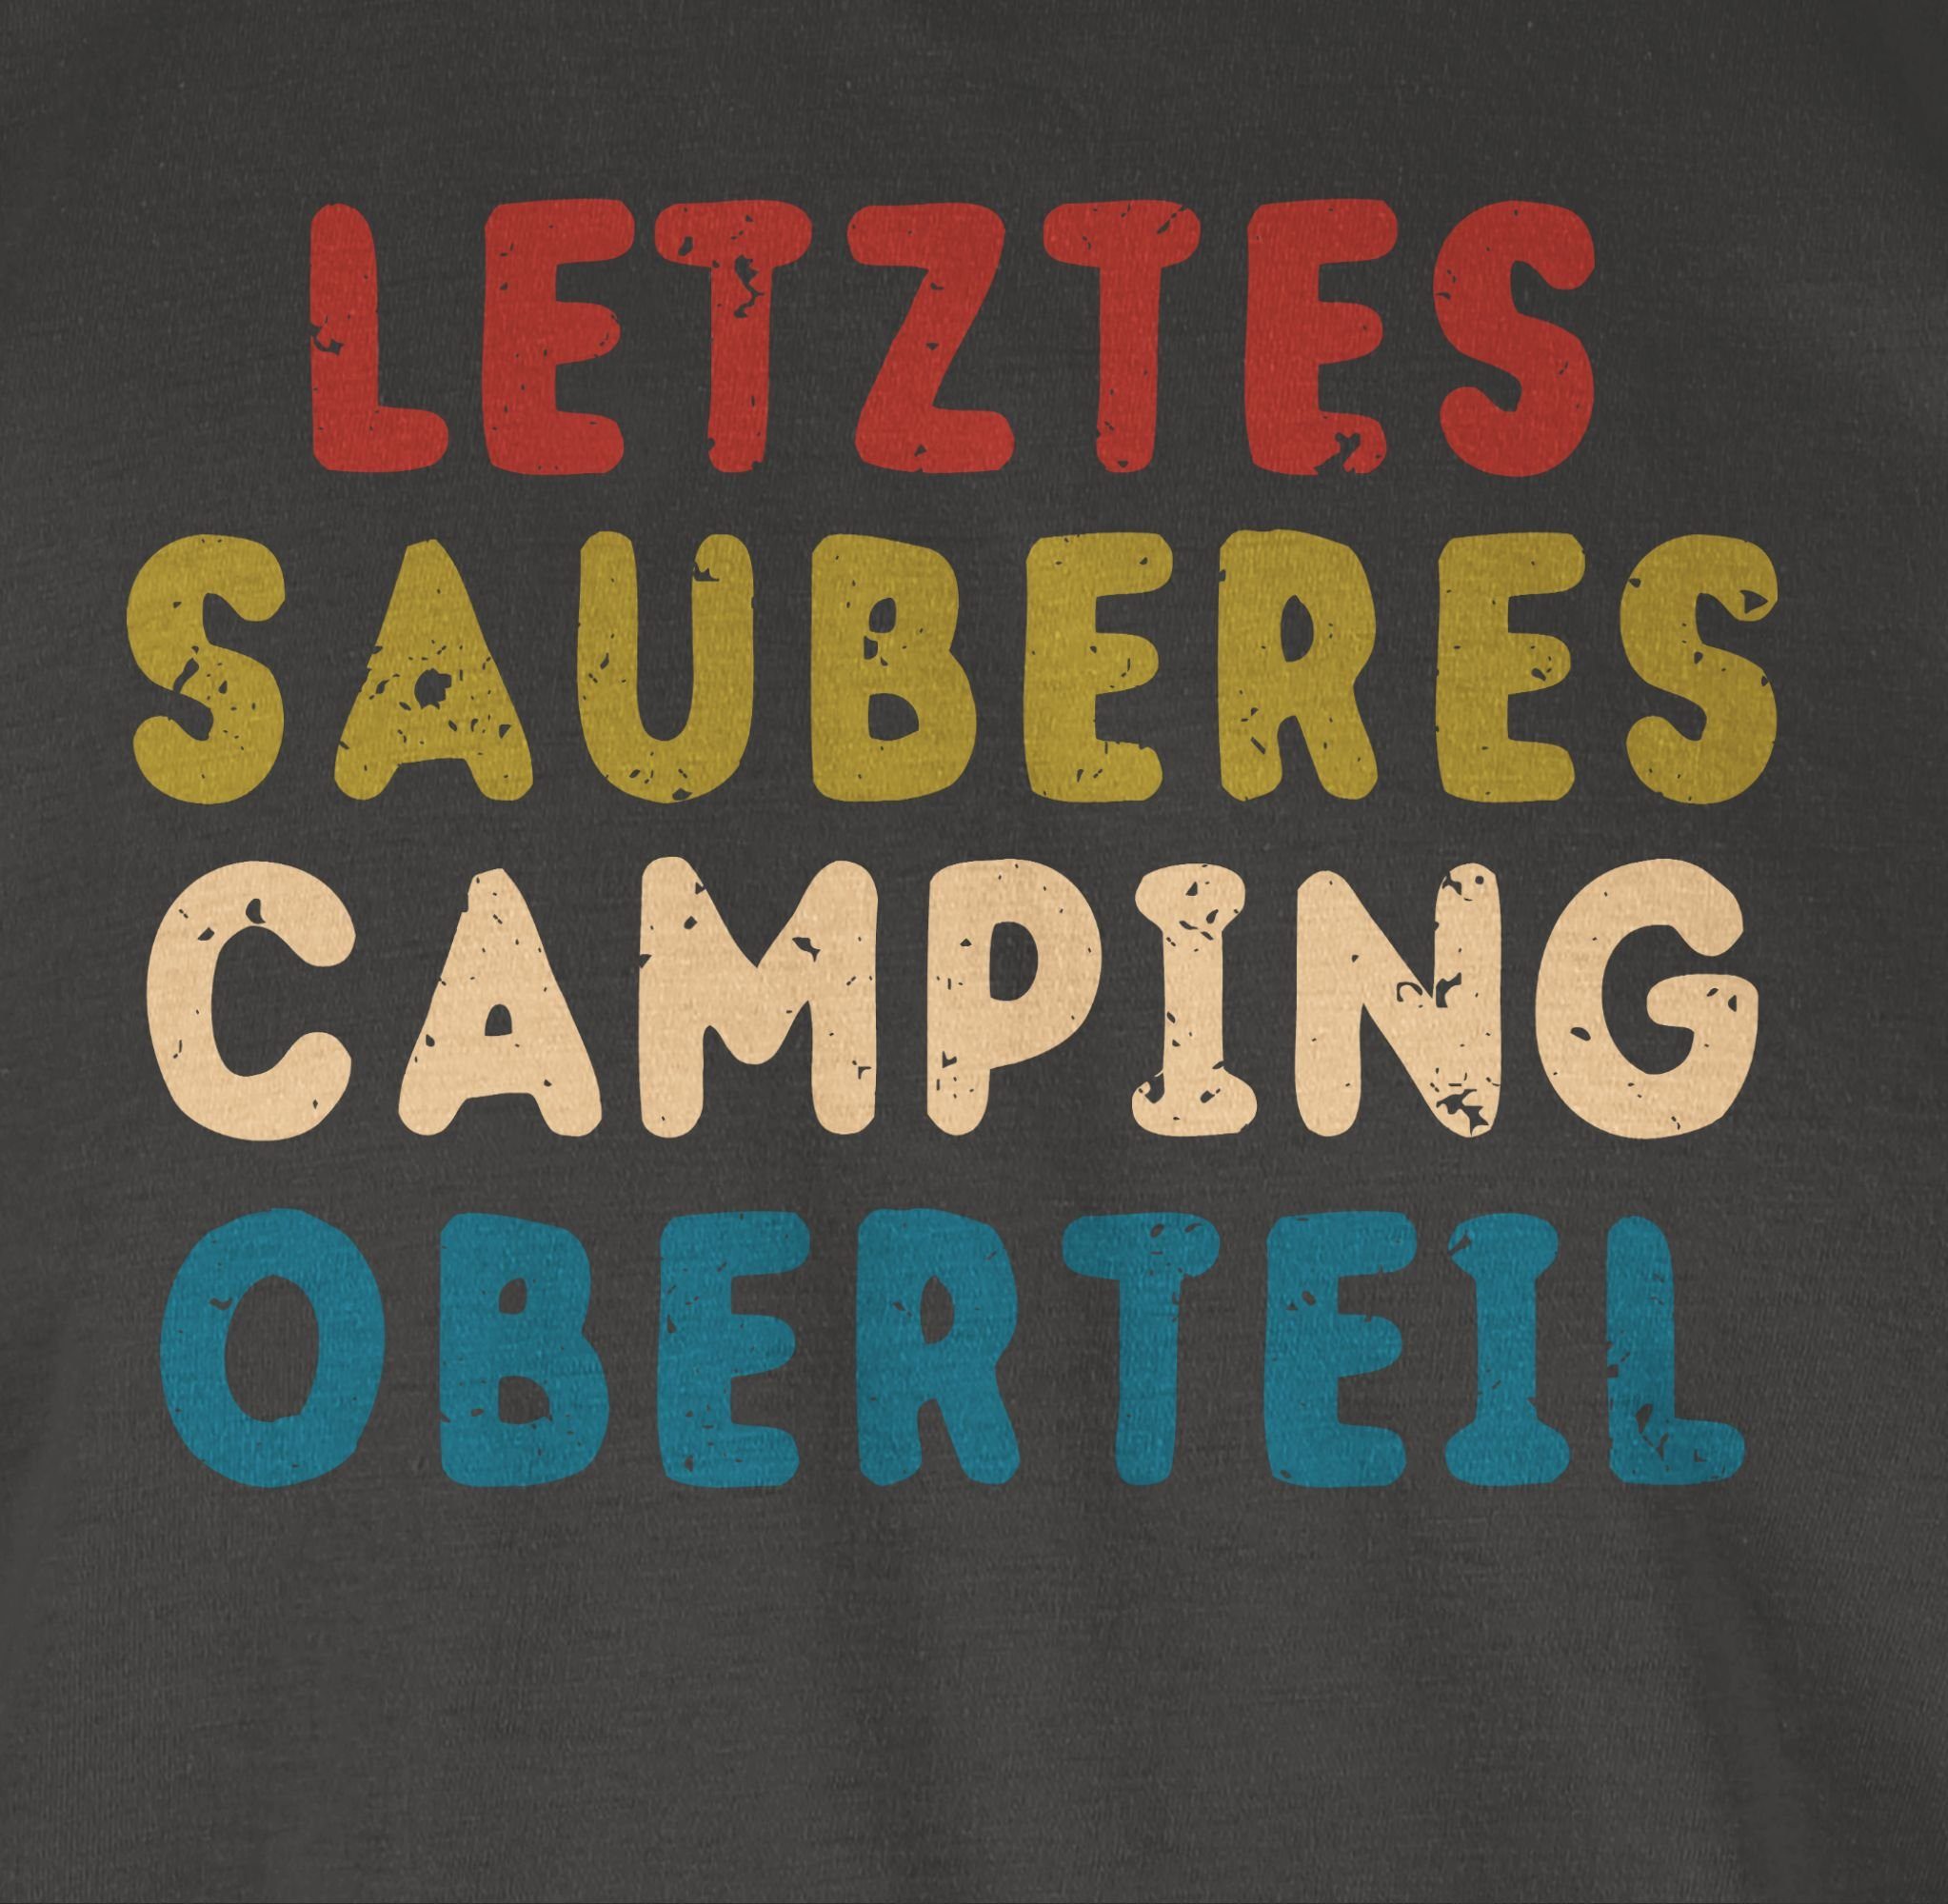 Dunkelgrau sauberes T-Shirt Statement Oberteil Shirtracer Sprüche Letztes Camping 02